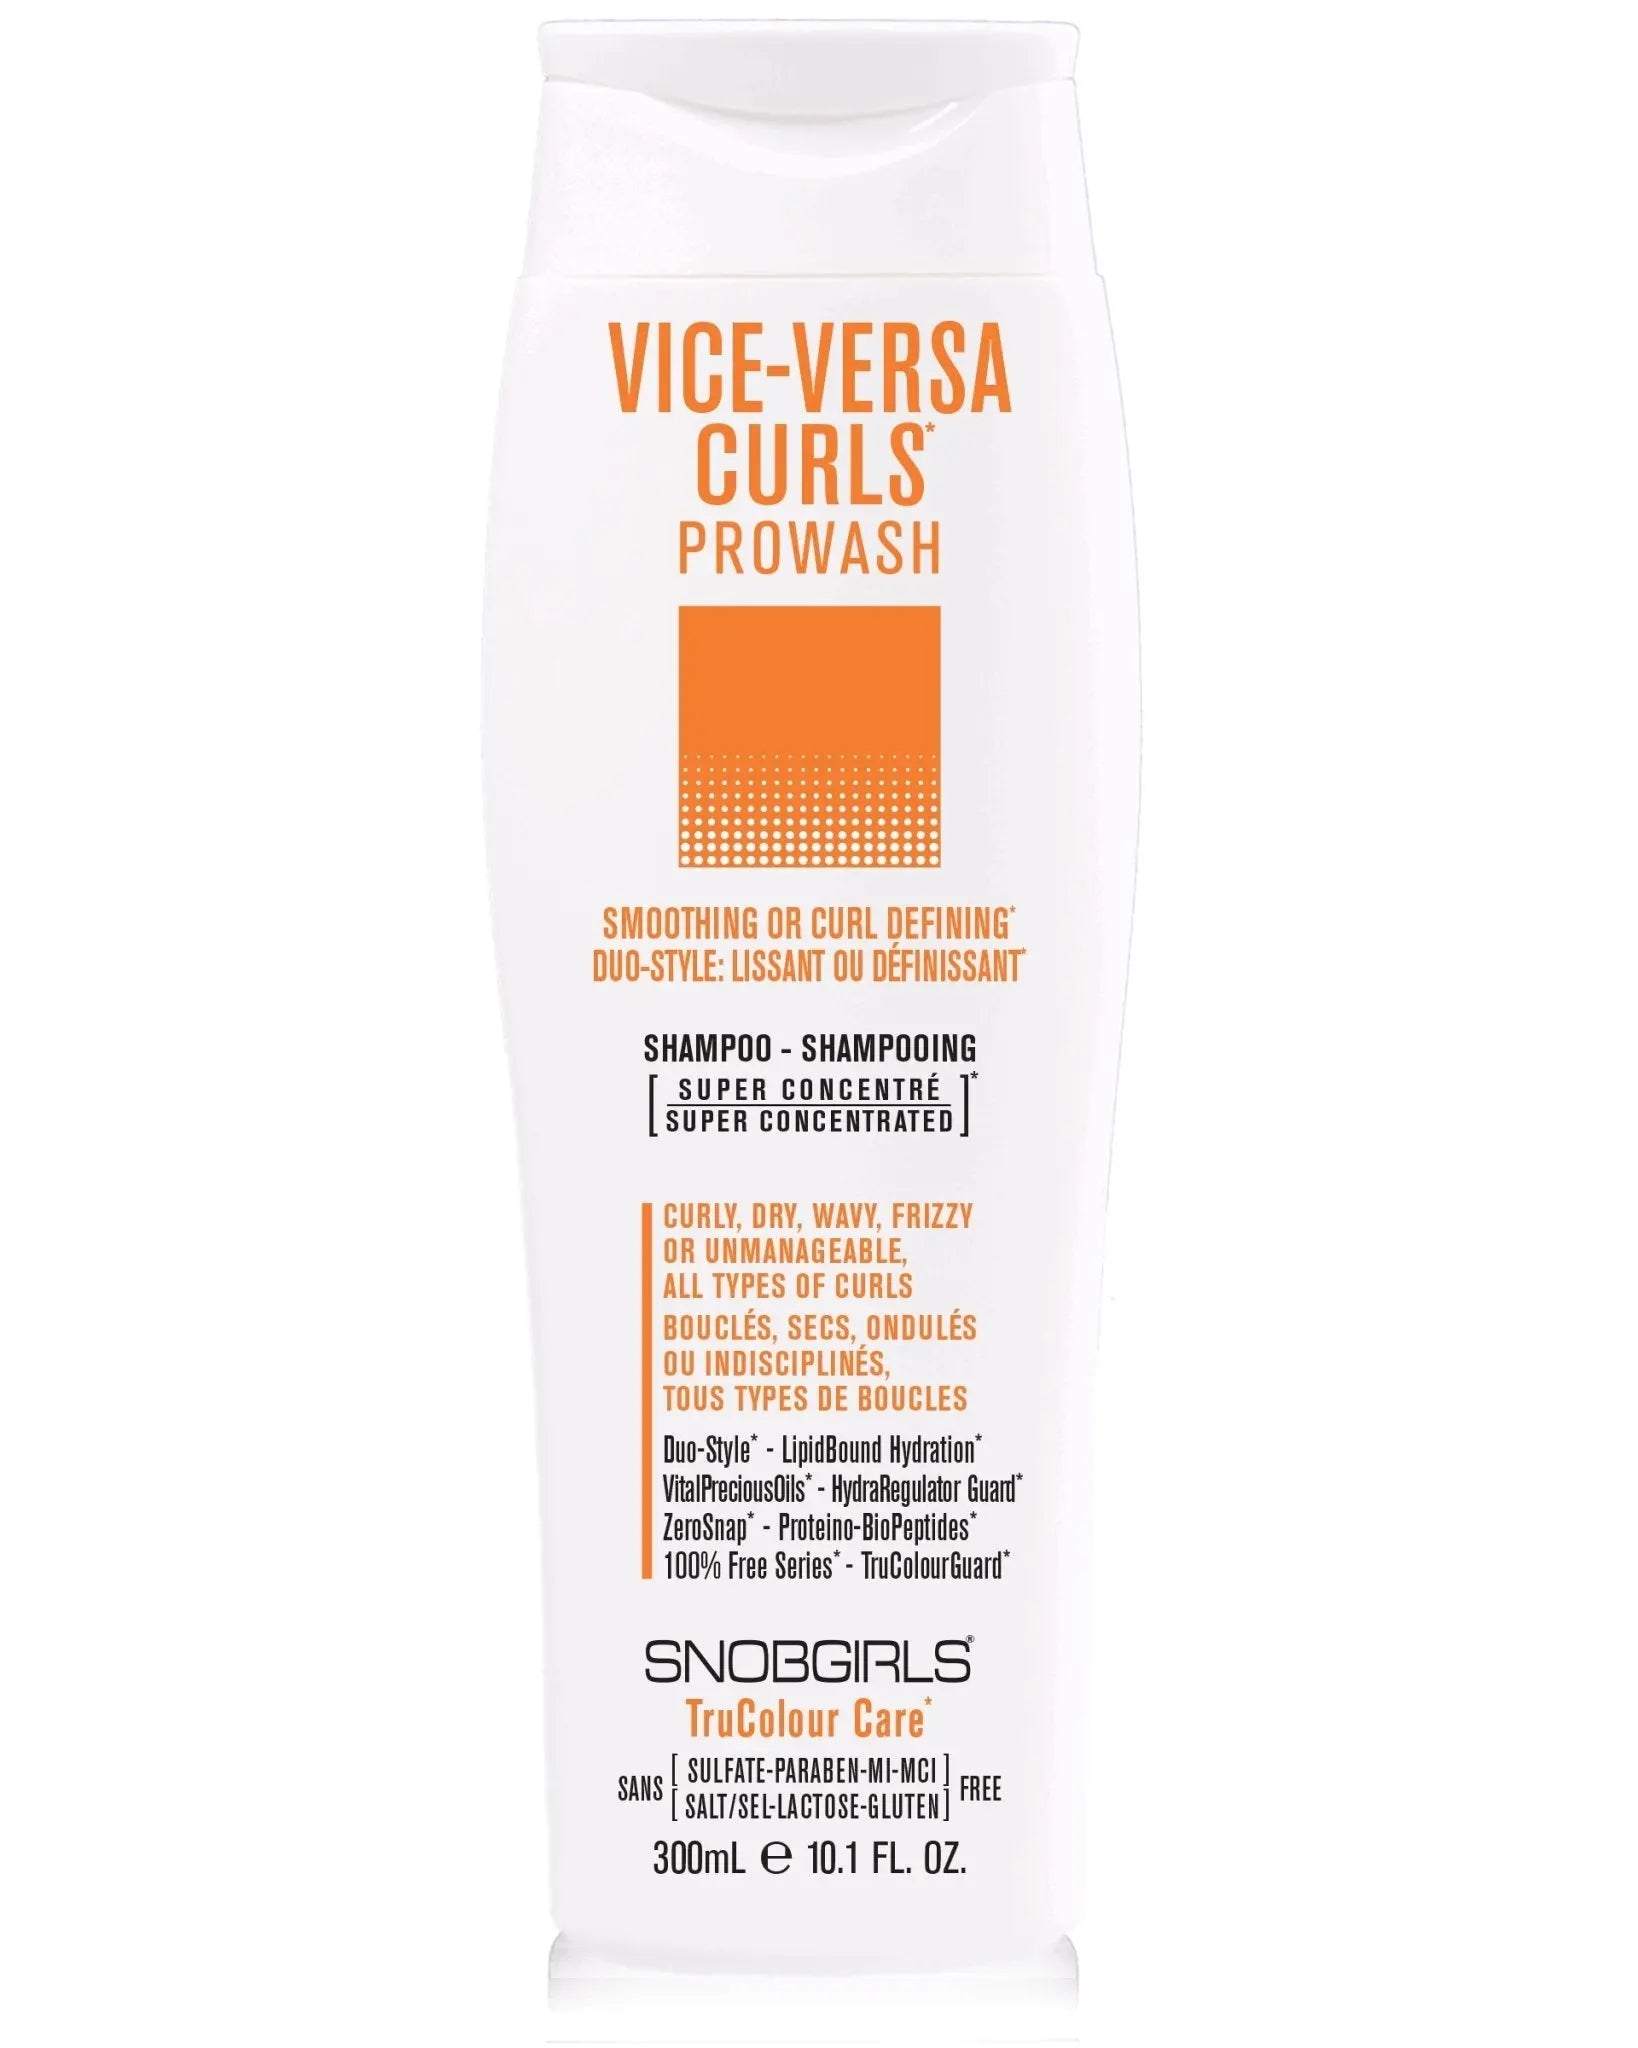 VICE-VERSA CURLS Prowash (shampoo) 10.1 FL. OZ. - SNOBGIRLS.com